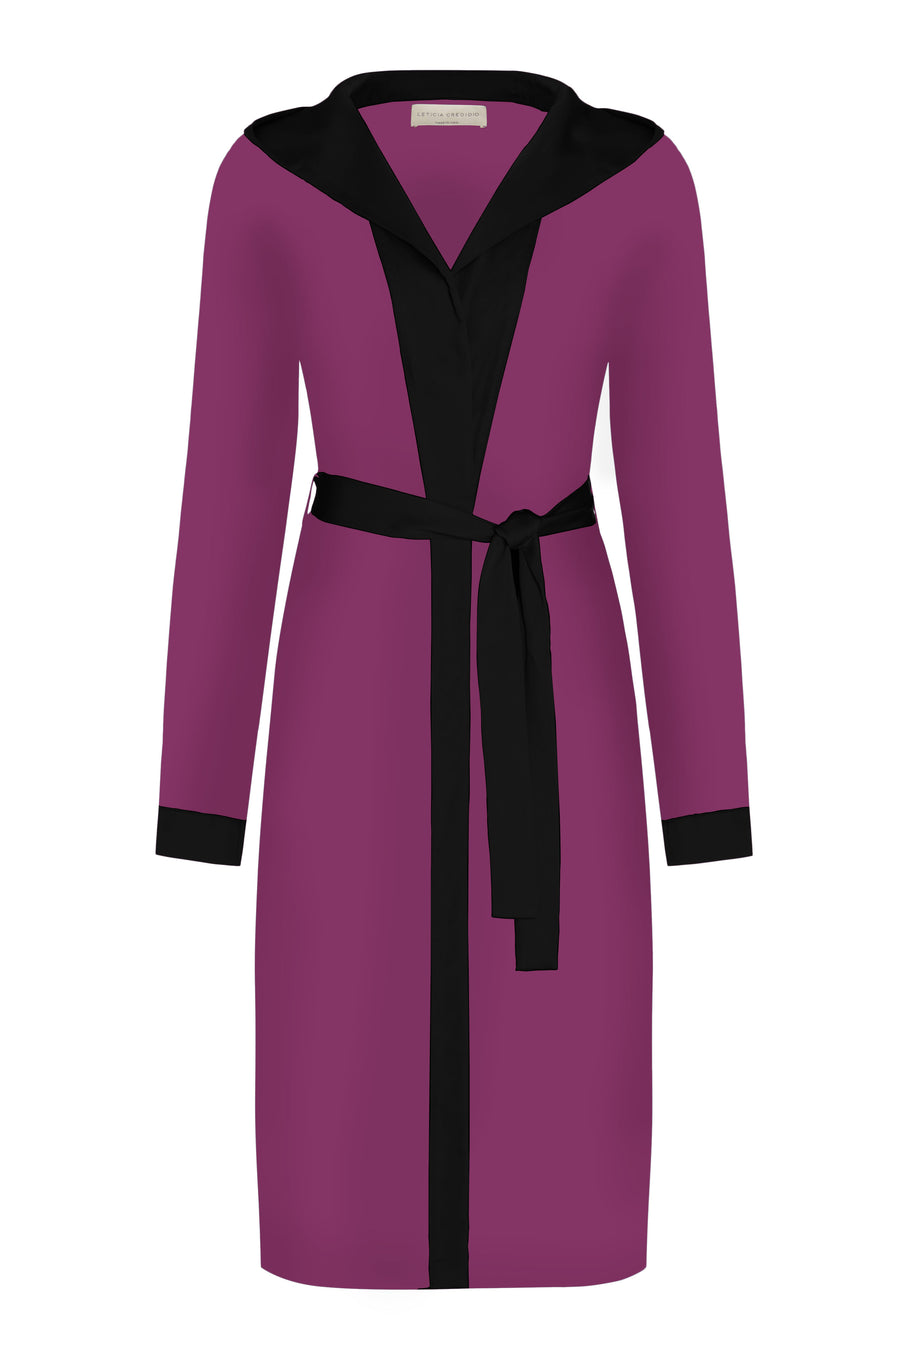 Women's loungewear - Black and purple vegan silk nightgown